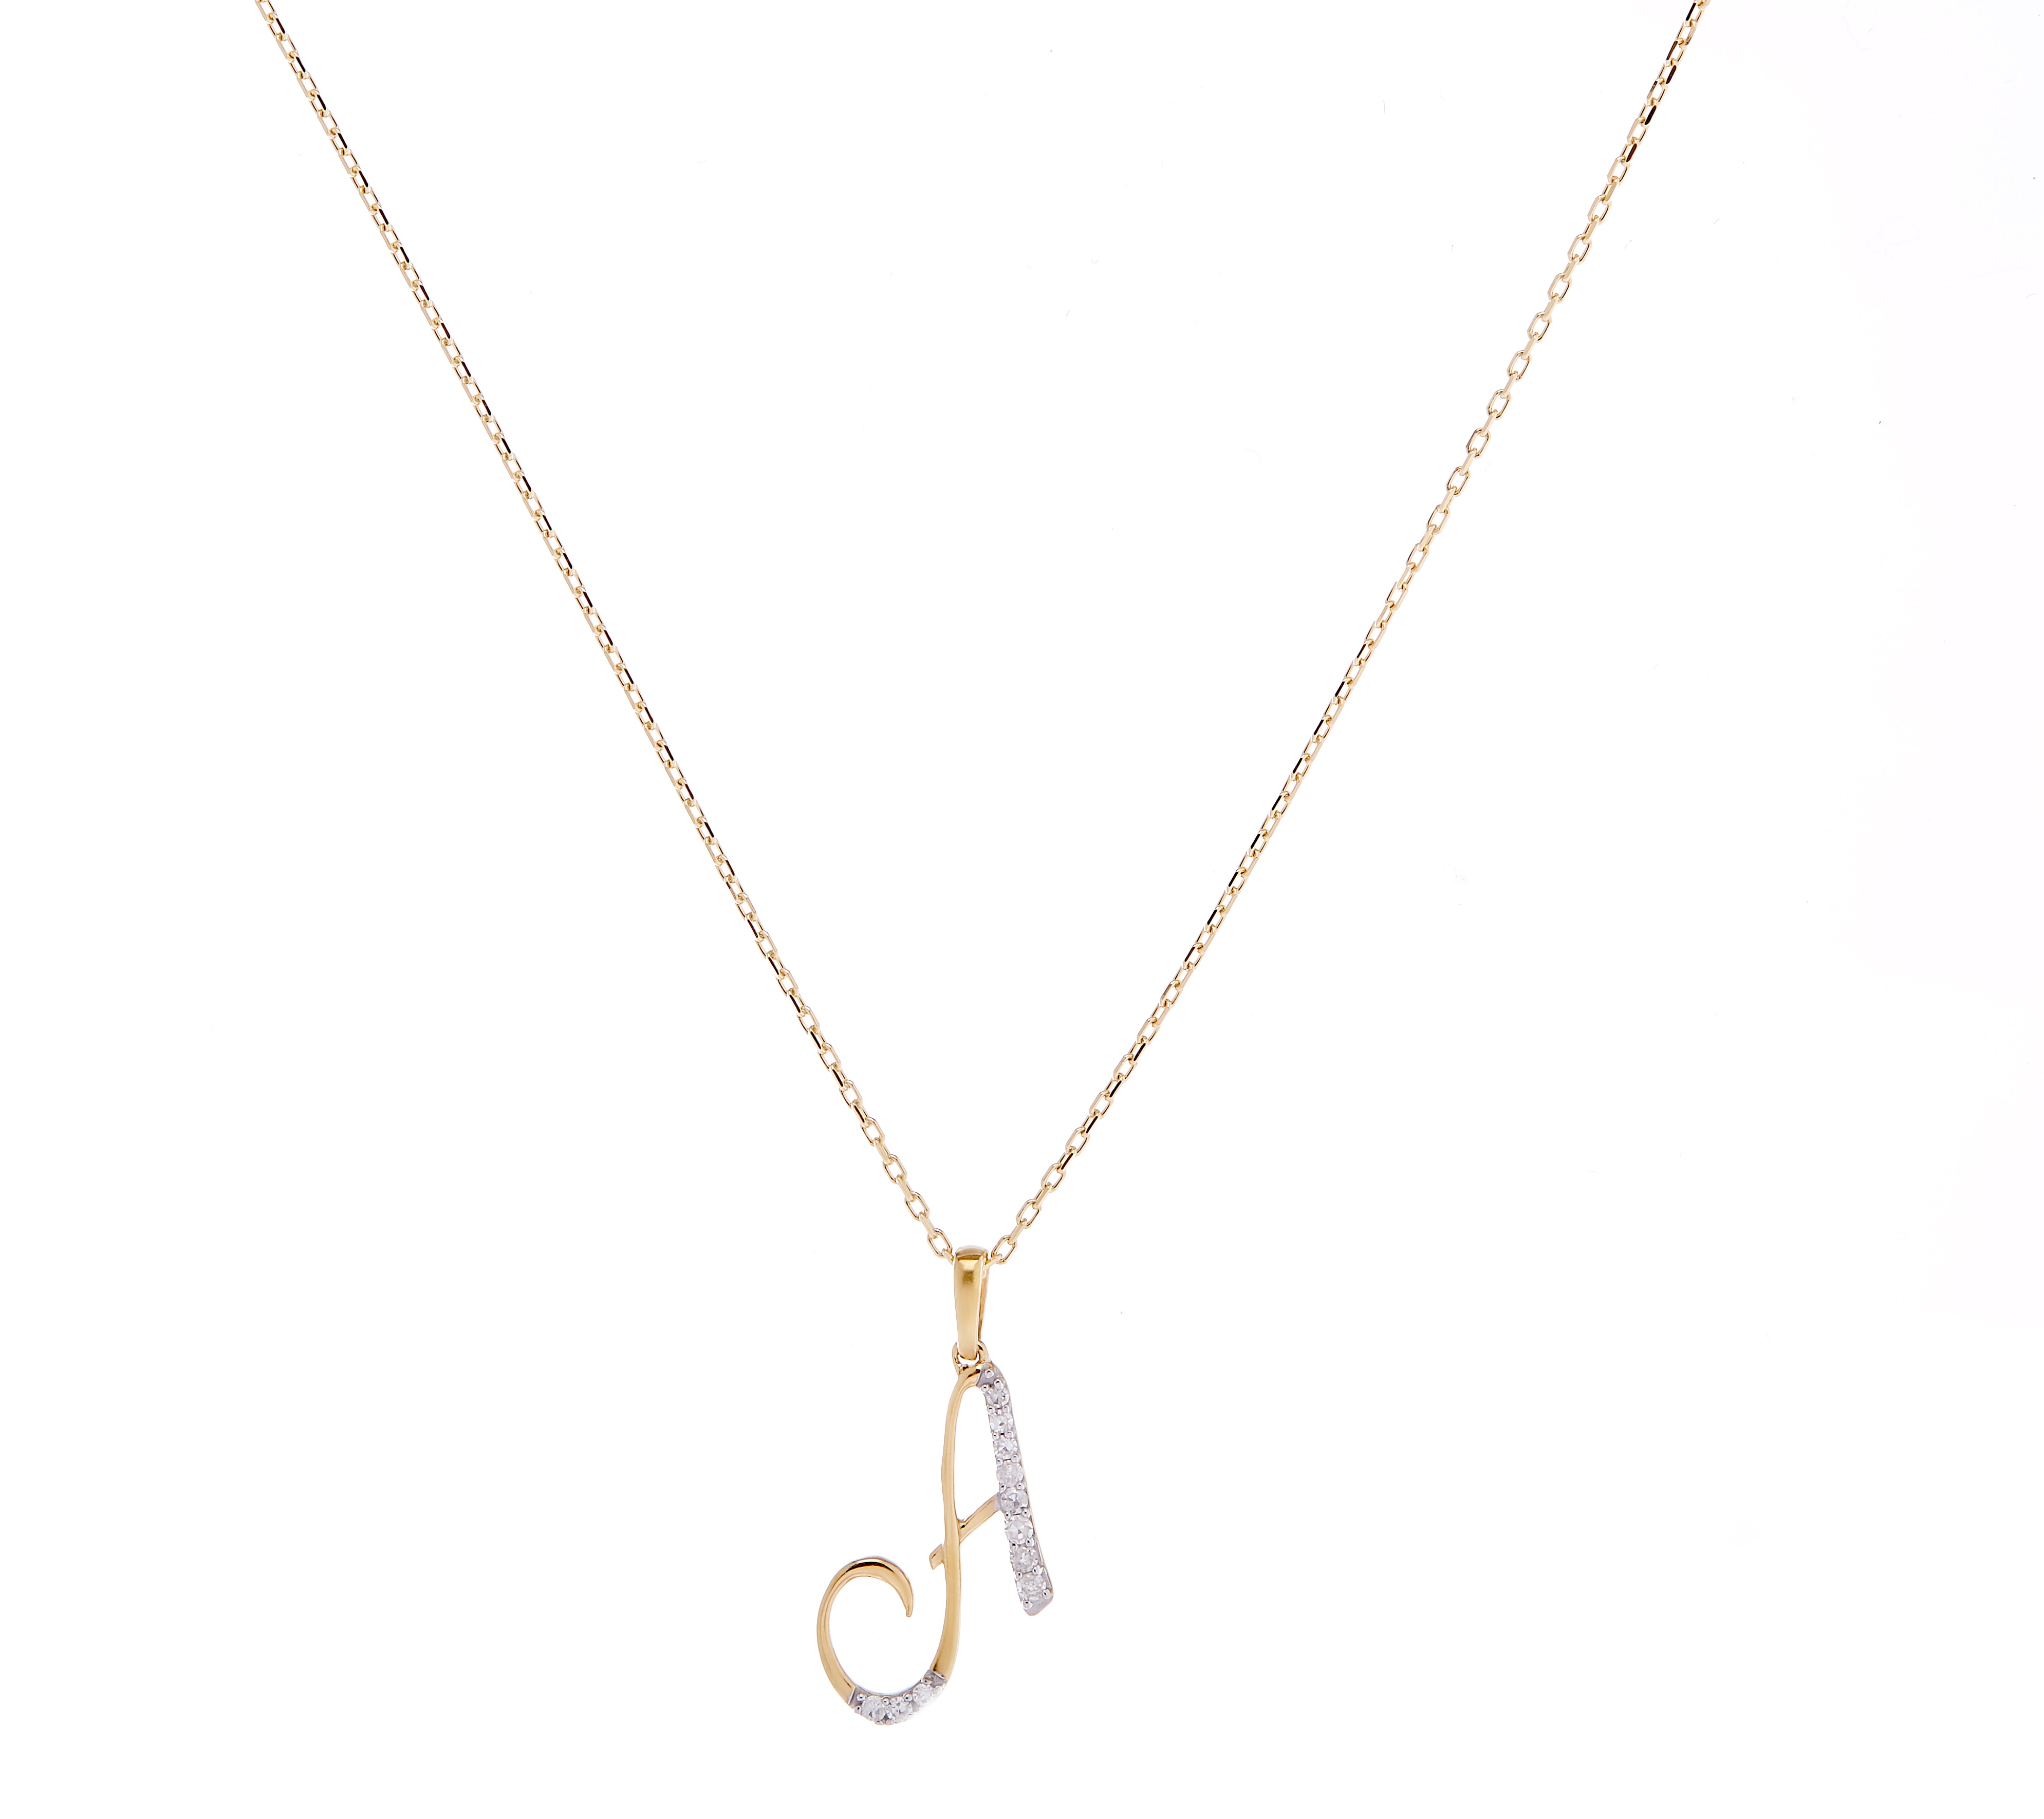 Jewellery - Necklaces & Pendants - Pendant Necklaces - Sterling